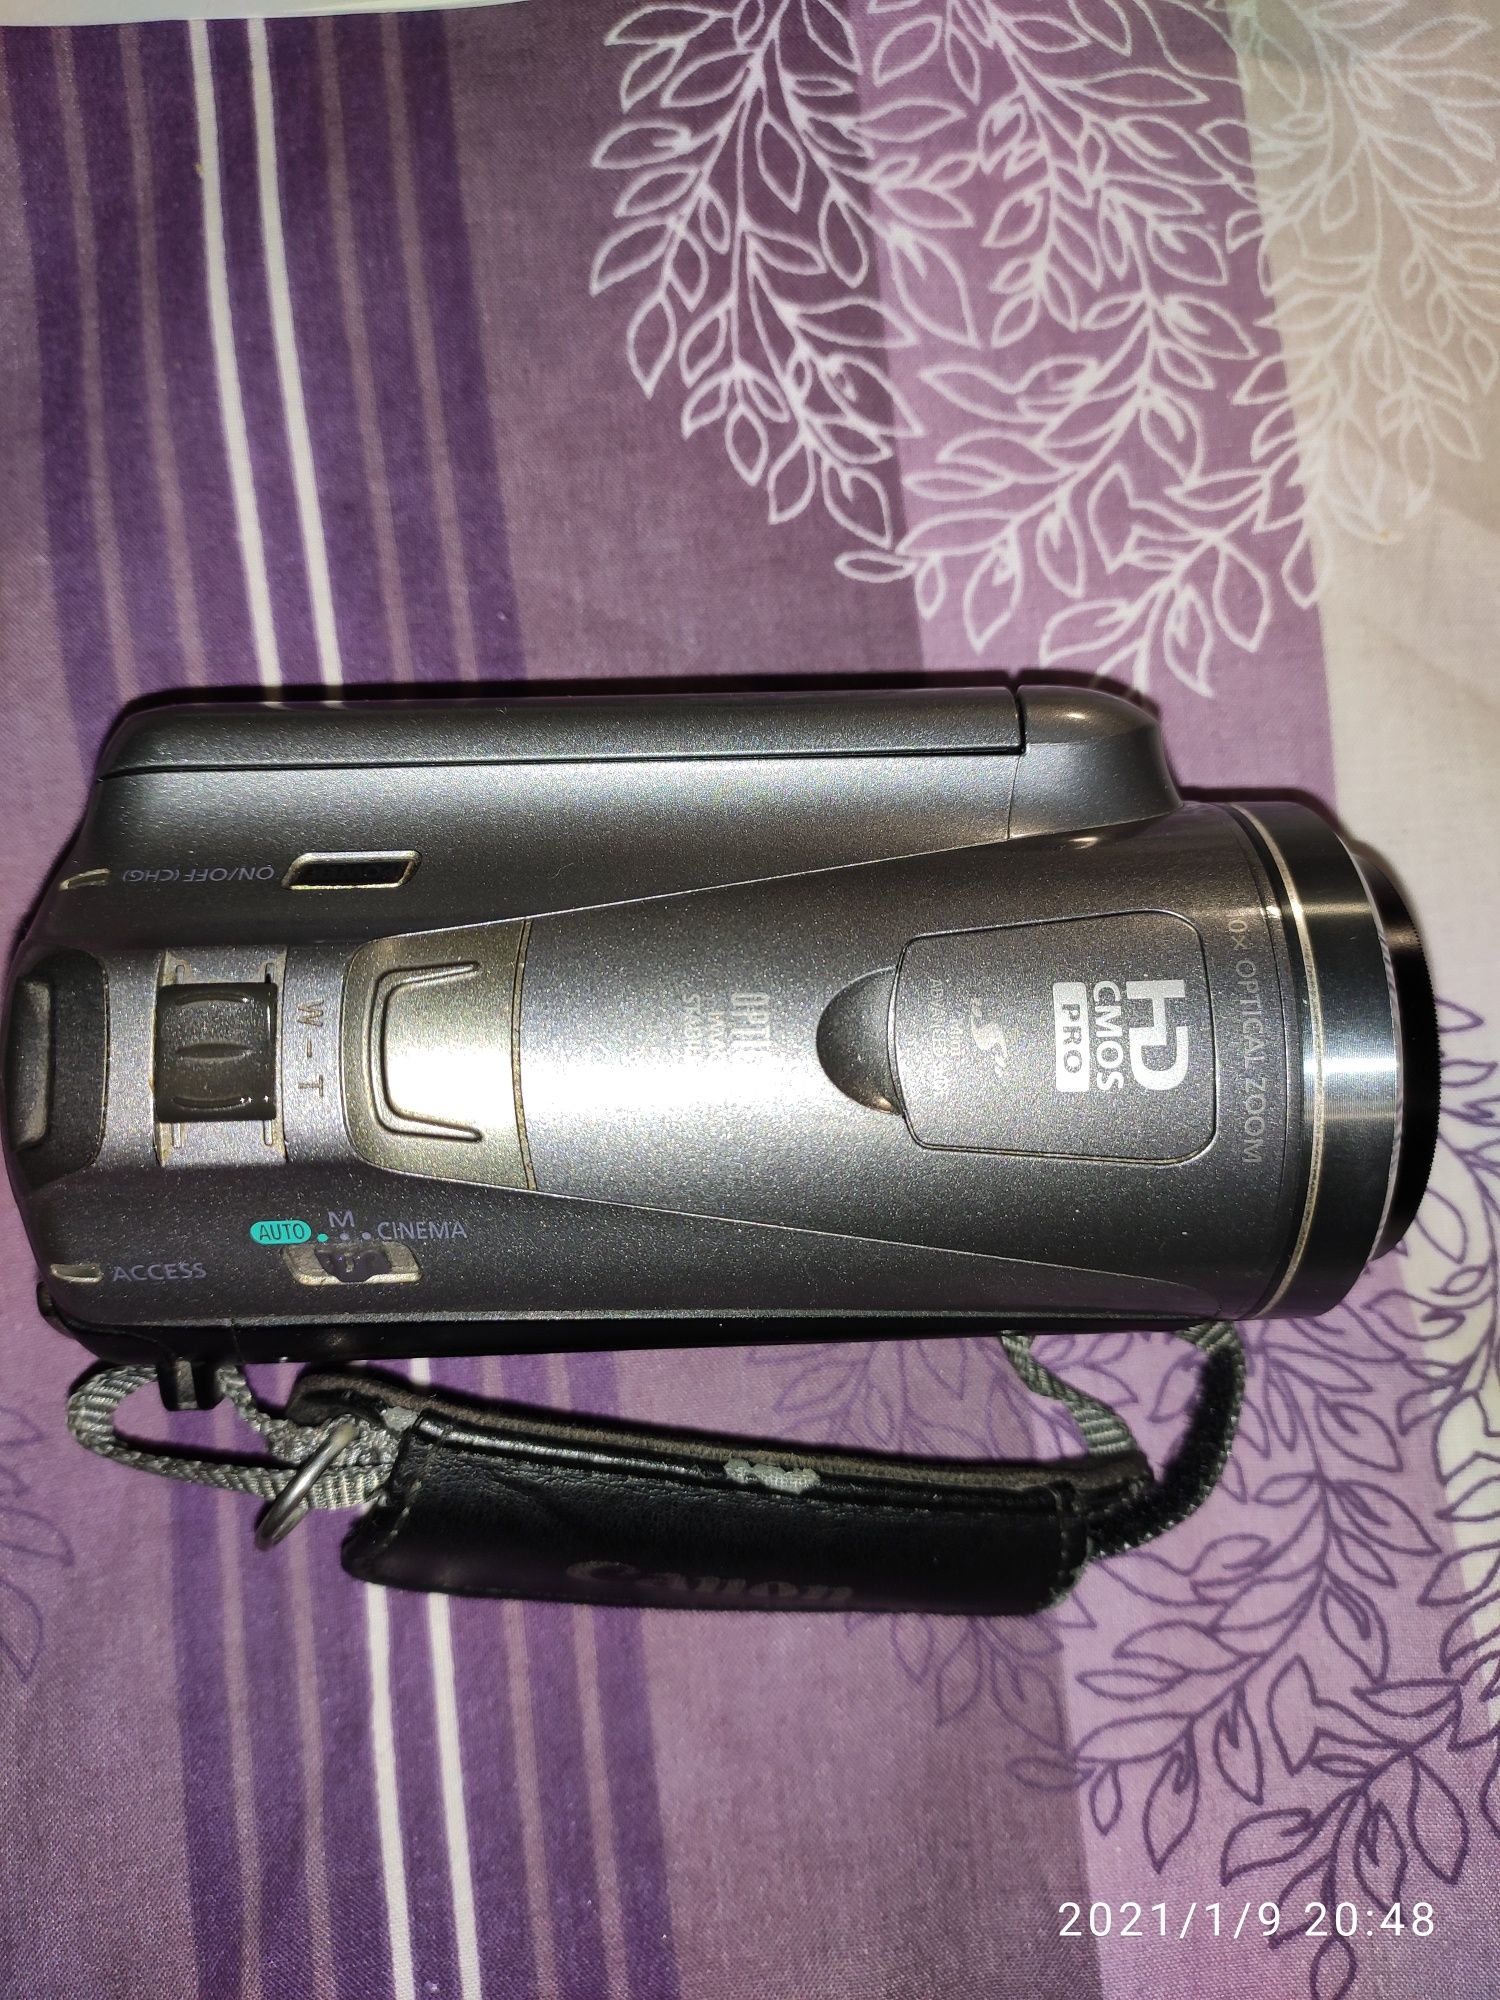 Видеокамера Canon Legria HF M406 матрица 1/3 HD CMOS PRO.